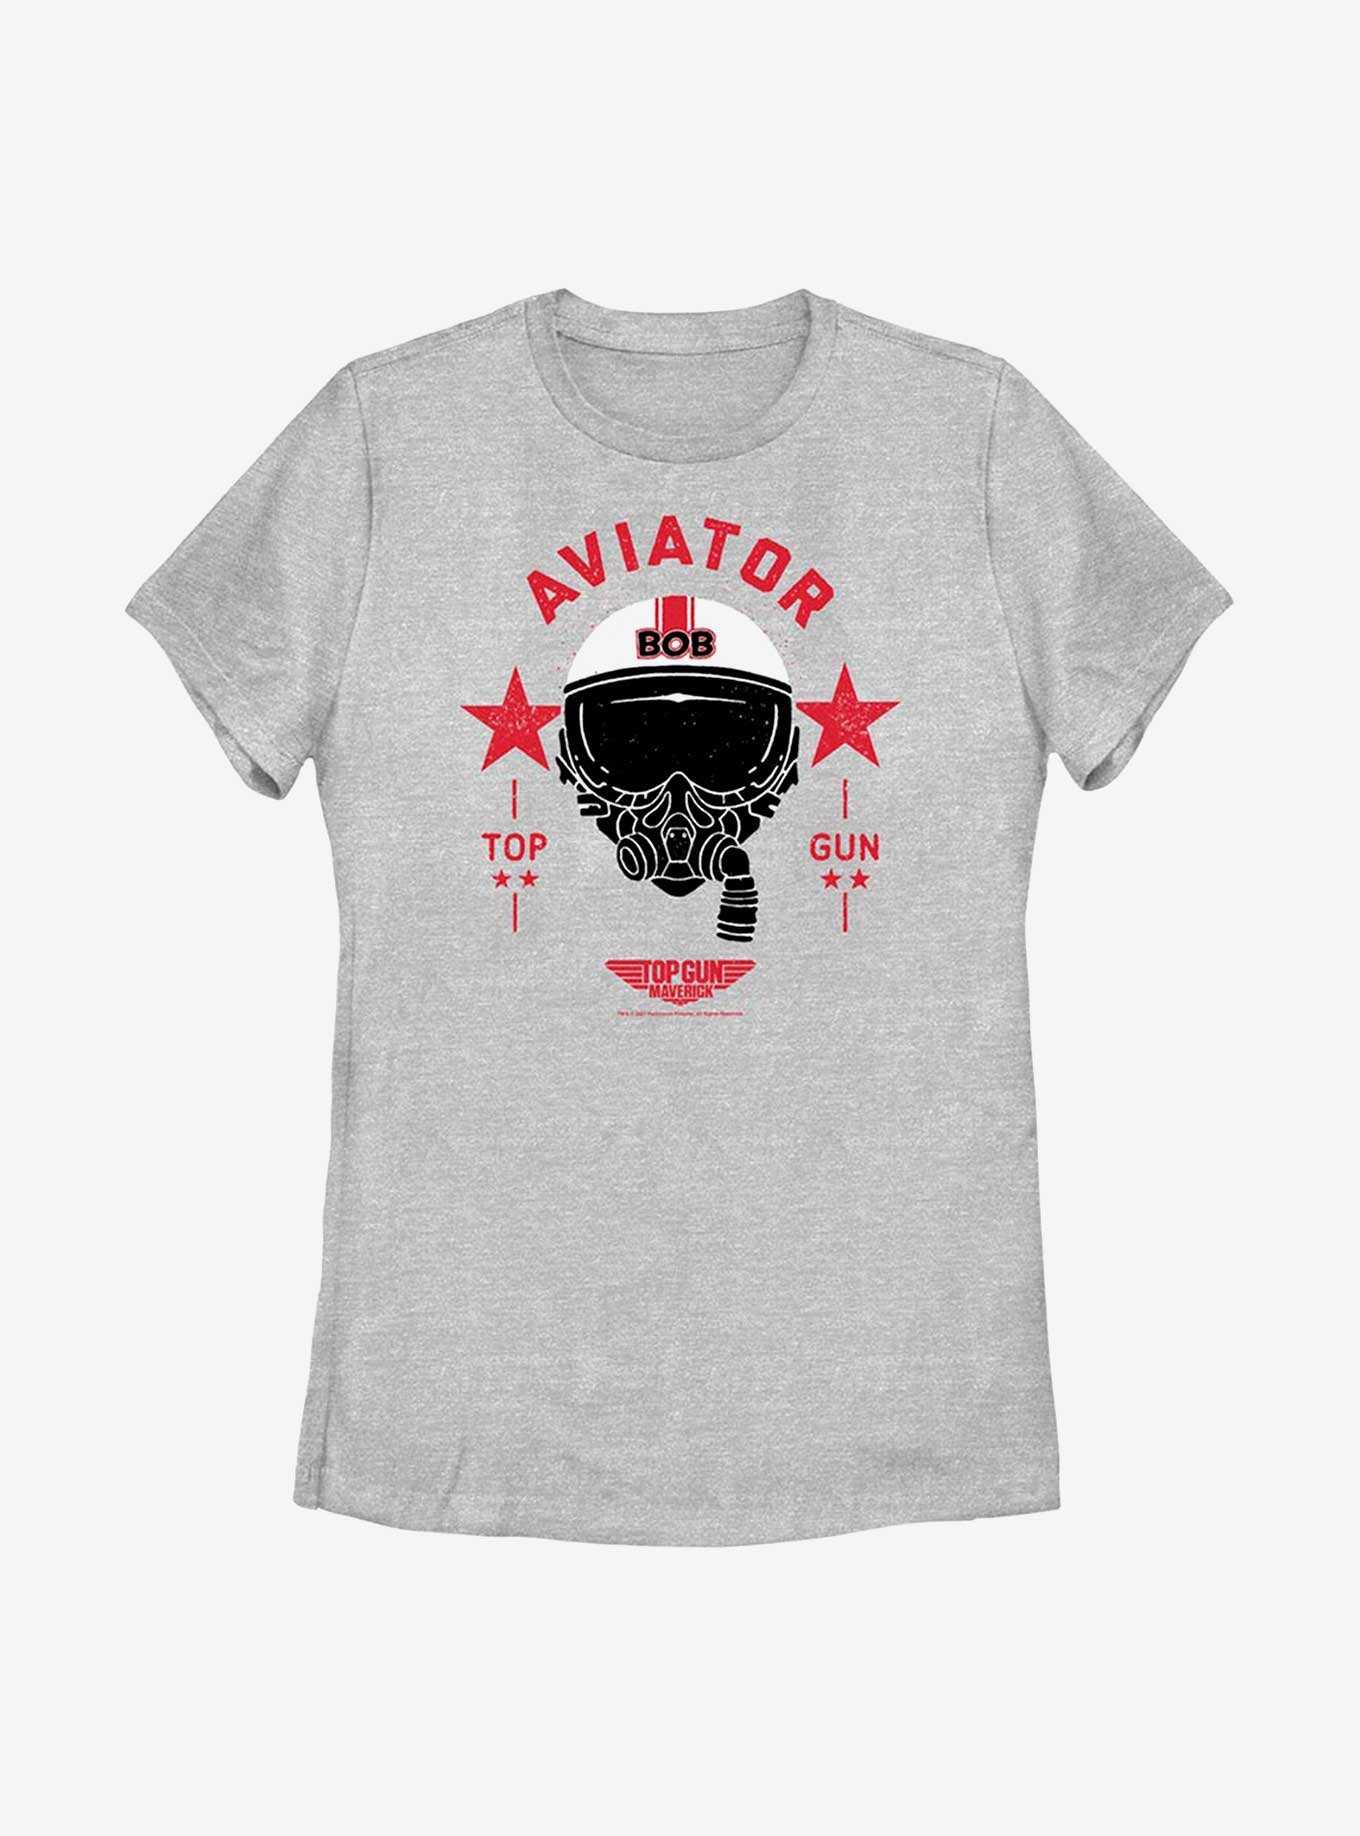 Top Gun: Maverick Bob Aviator Womens T-Shirt, , hi-res